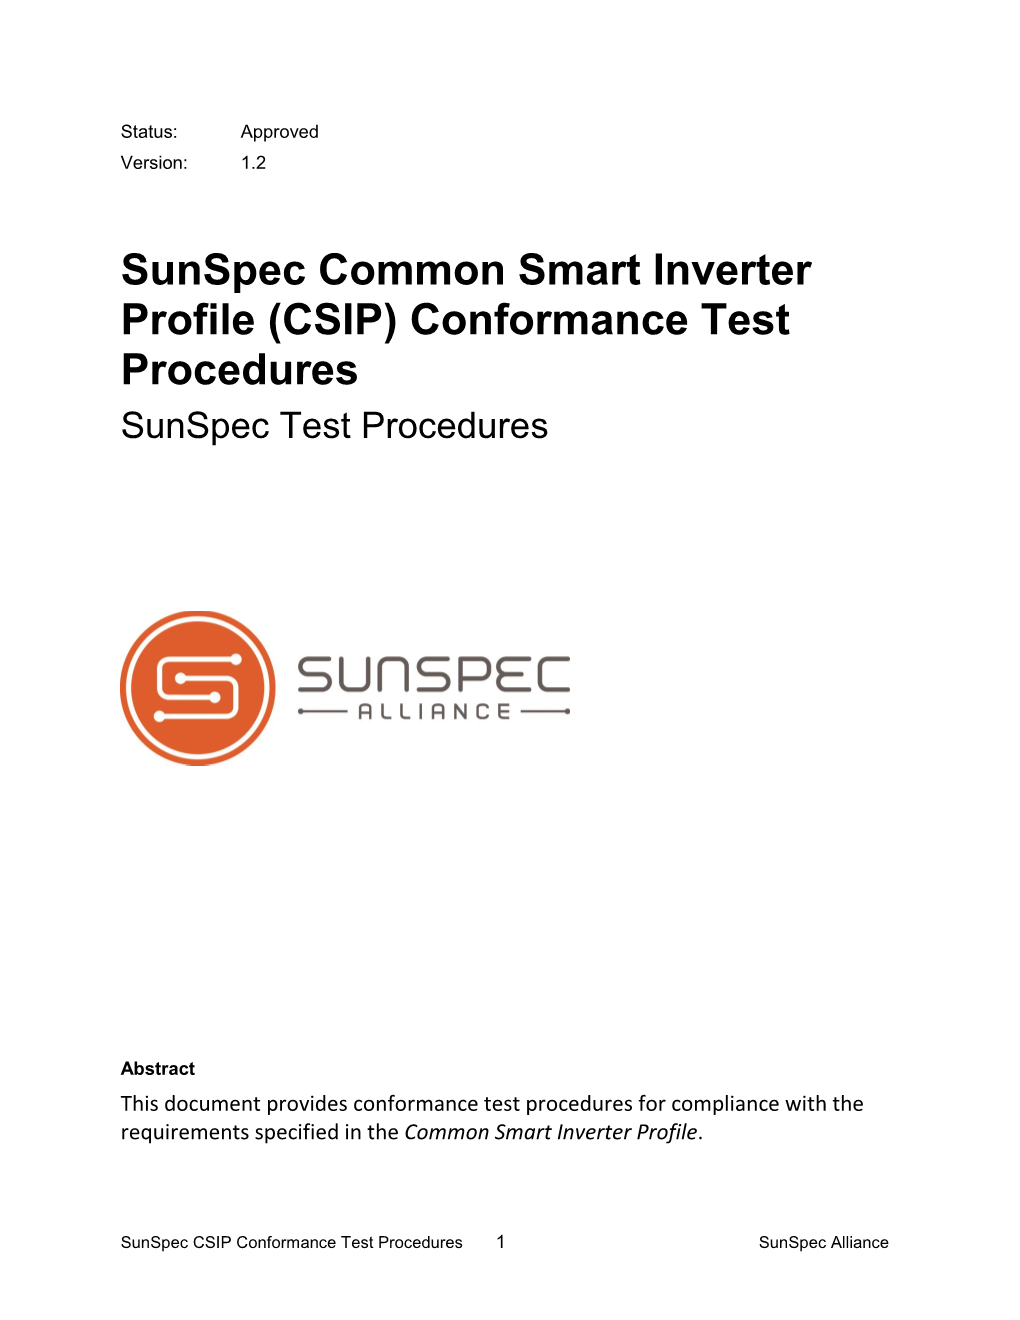 CSIP) Conformance Test Procedures Sunspec Test Procedures